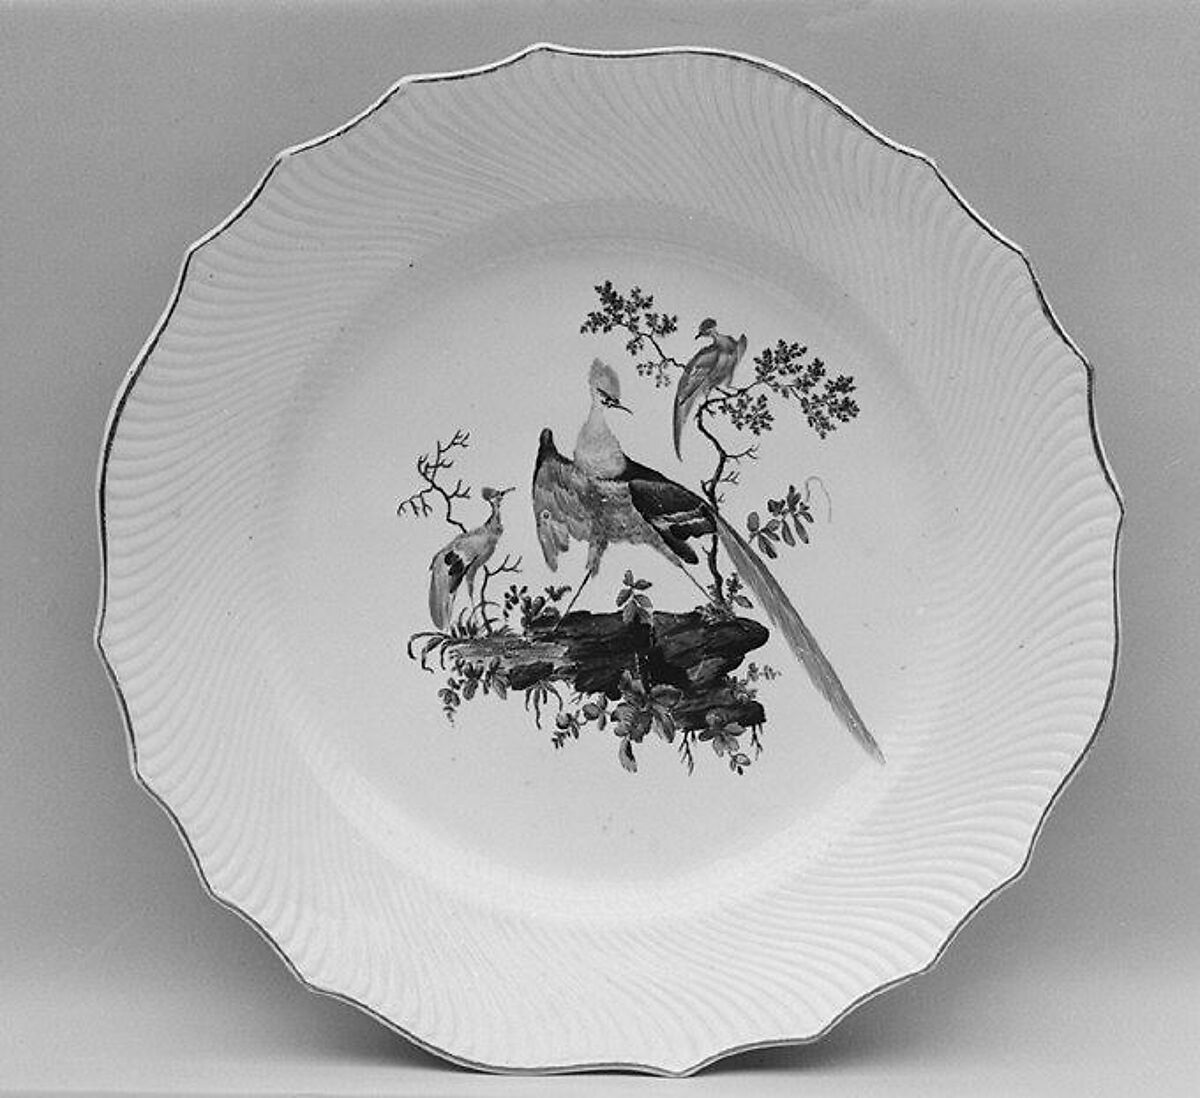 Plate (one of a pair), Tournai (Belgian, established ca. 1750), Soft-paste porcelain, Belgian, Tournai 